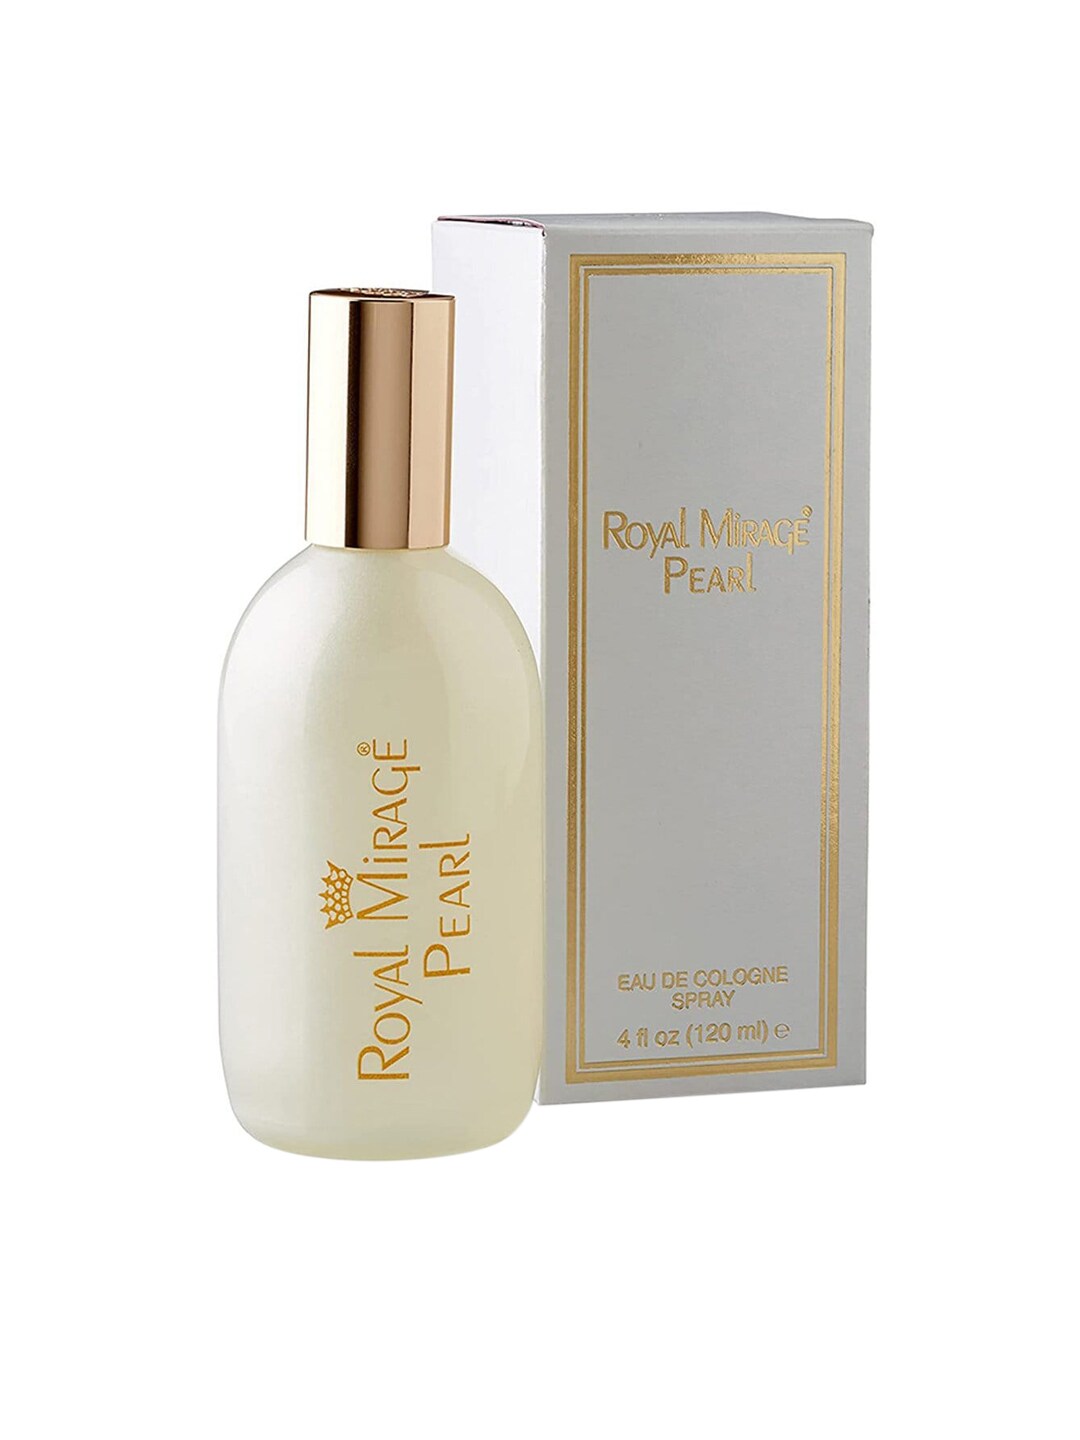 Royal Mirage Men Pearl Eau De Cologne Perfume 120ml Price in India